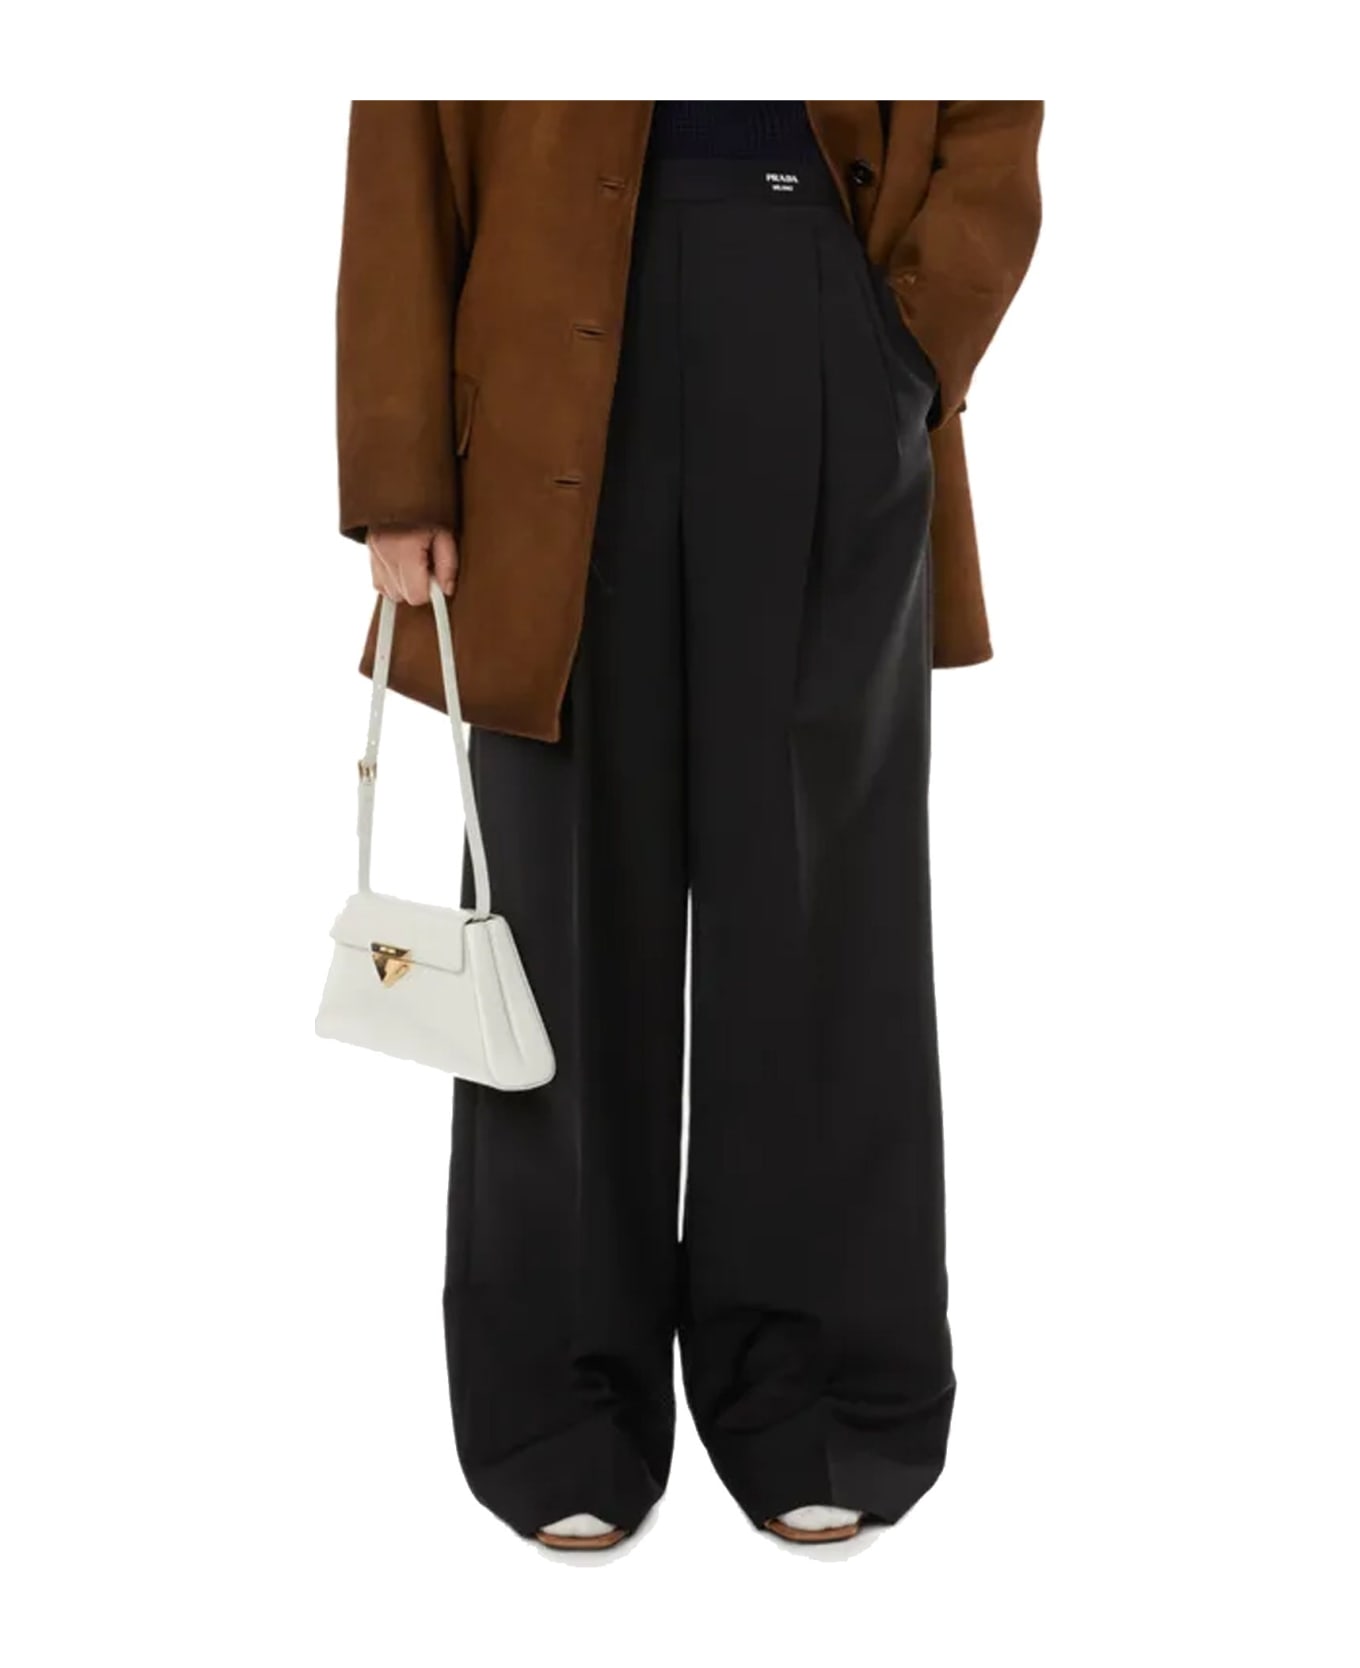 Prada purse Mohair And Wool Pants - Black